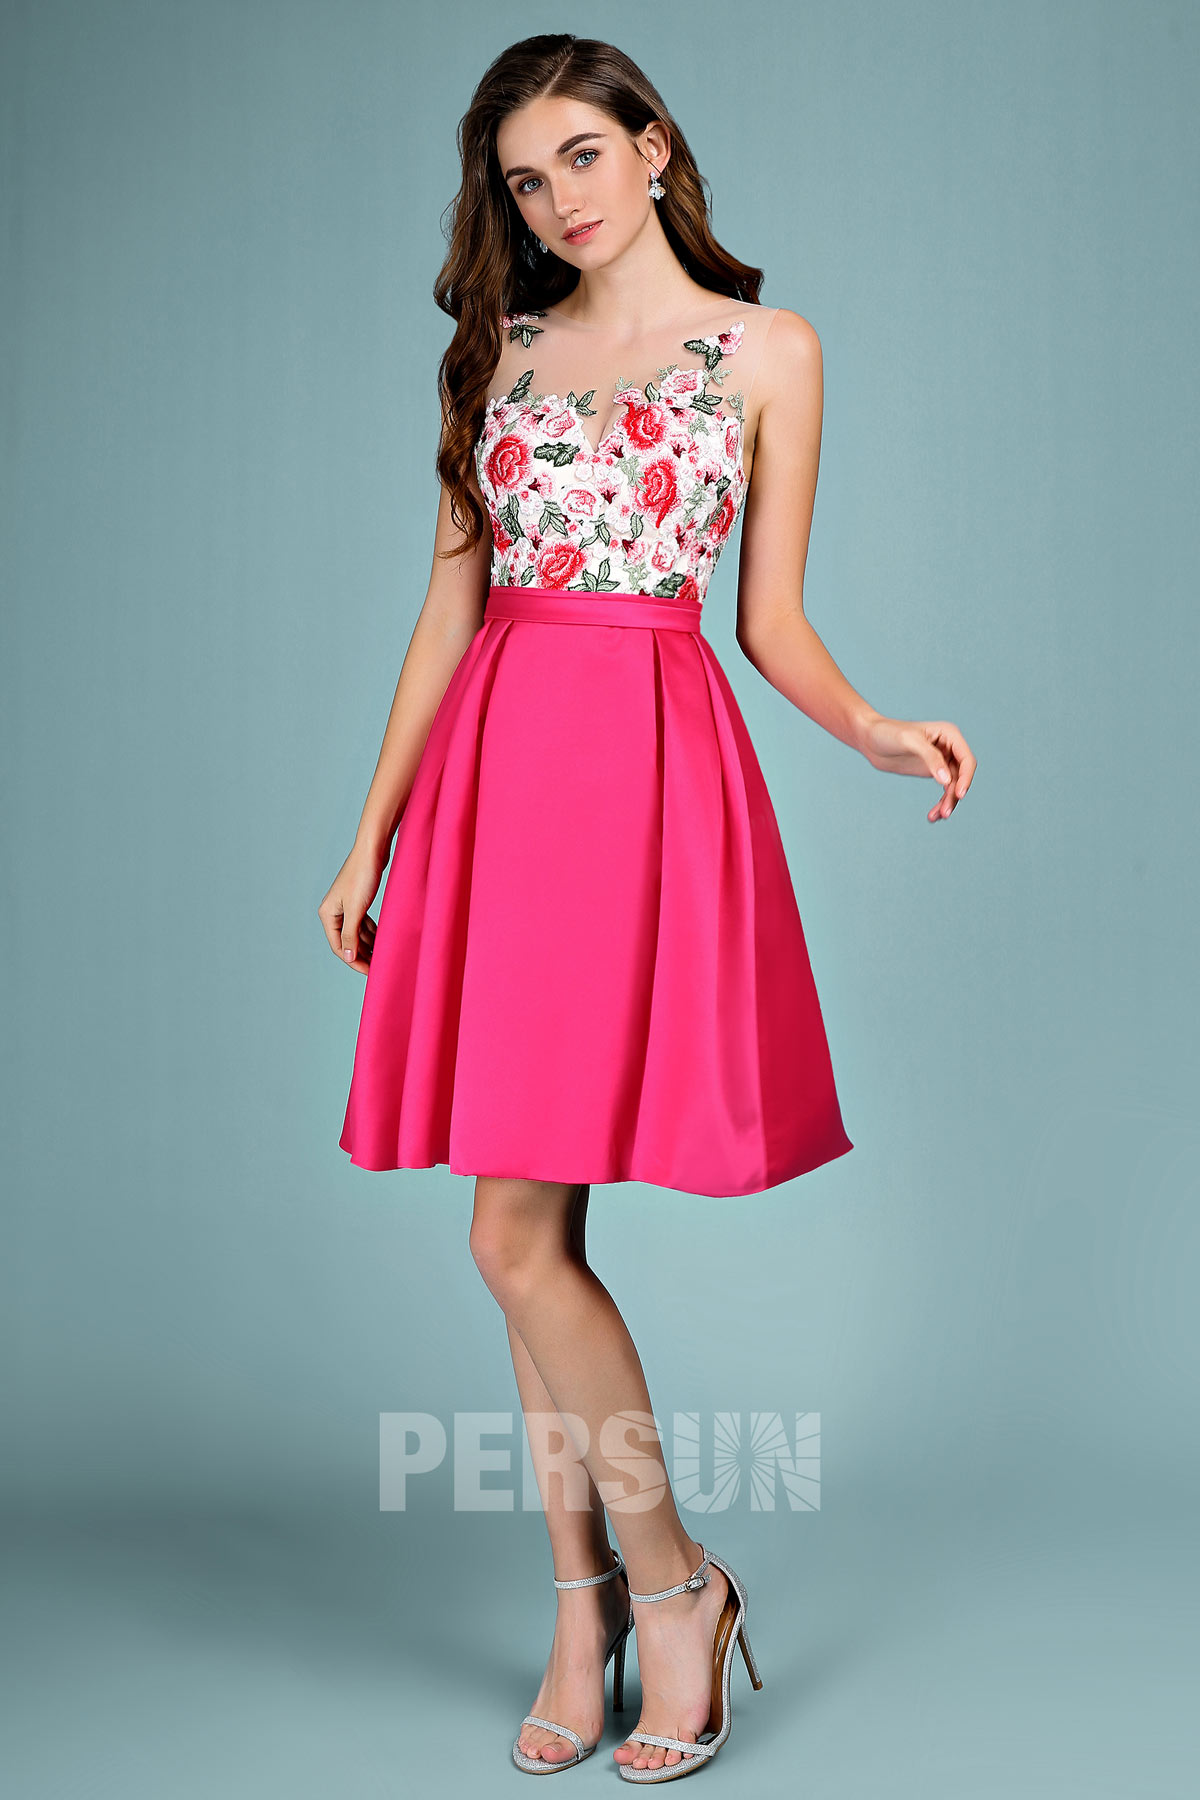 robe-de-gala-vintage-persun-bustier-dentelle-colorie-jupe-rose-bonbon.jpg?profile=RESIZE_584x